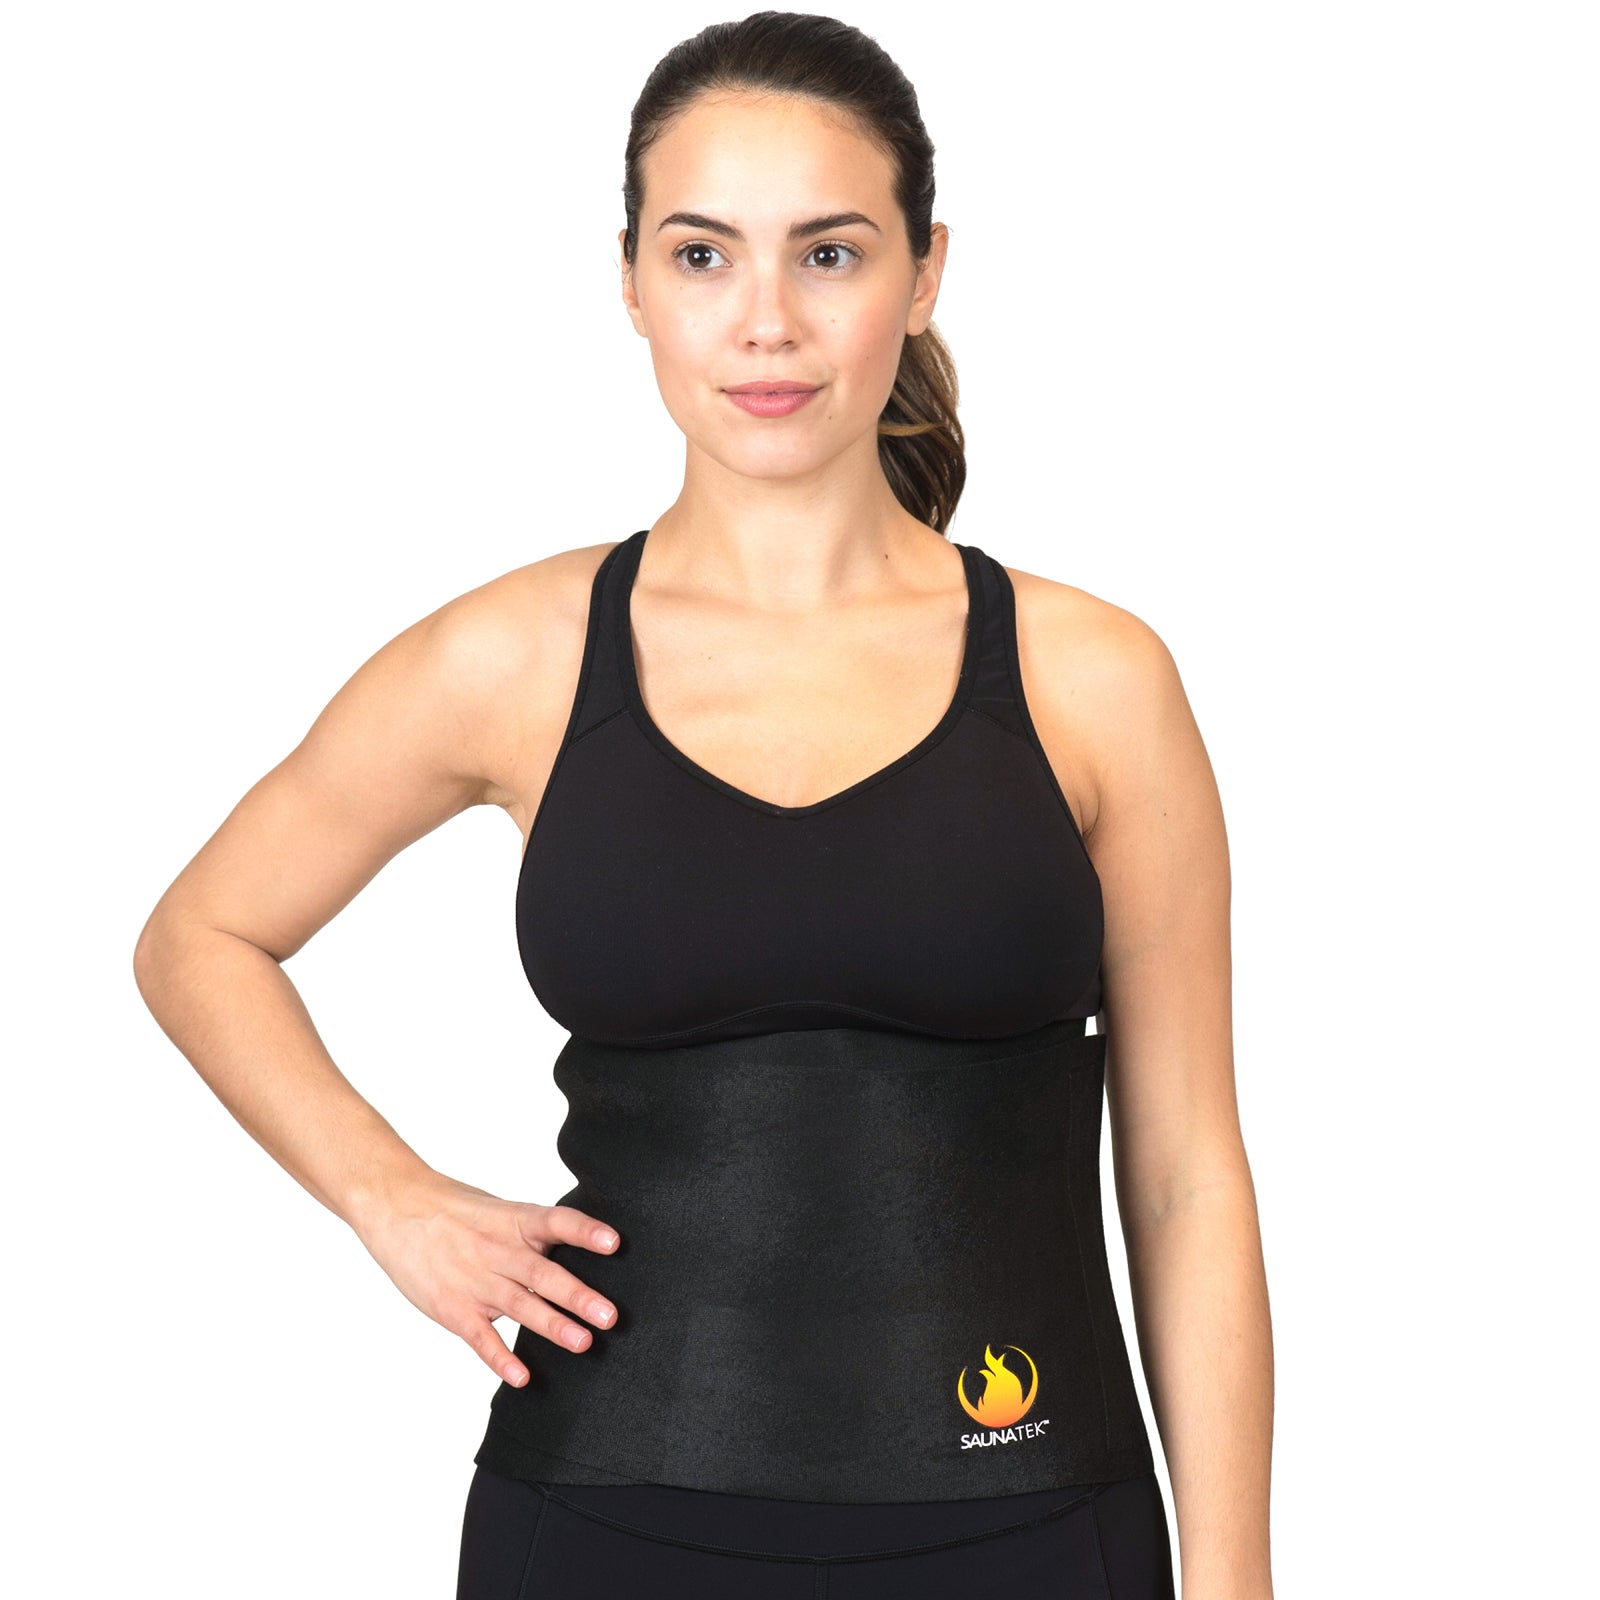 Maskateer Store. Comfortable Sweat Belt For Intense Cardio – MASKATEER  Cardio Sweat Gym Belt